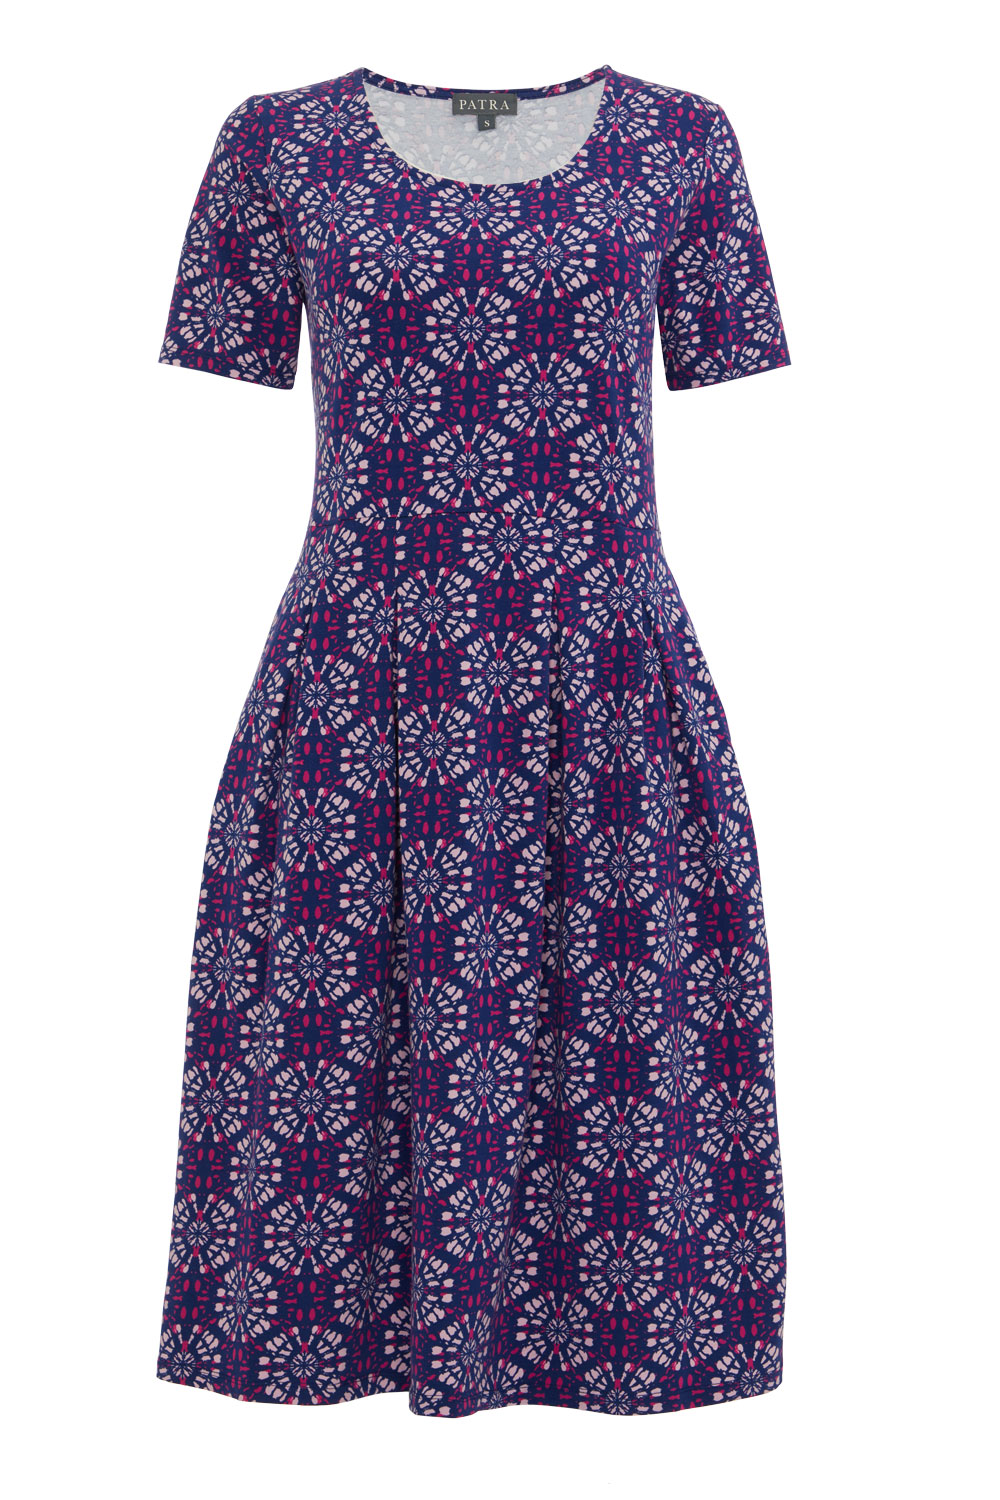 Women's Cotton Jersey Dress with Pleats | ZCJD | Patra